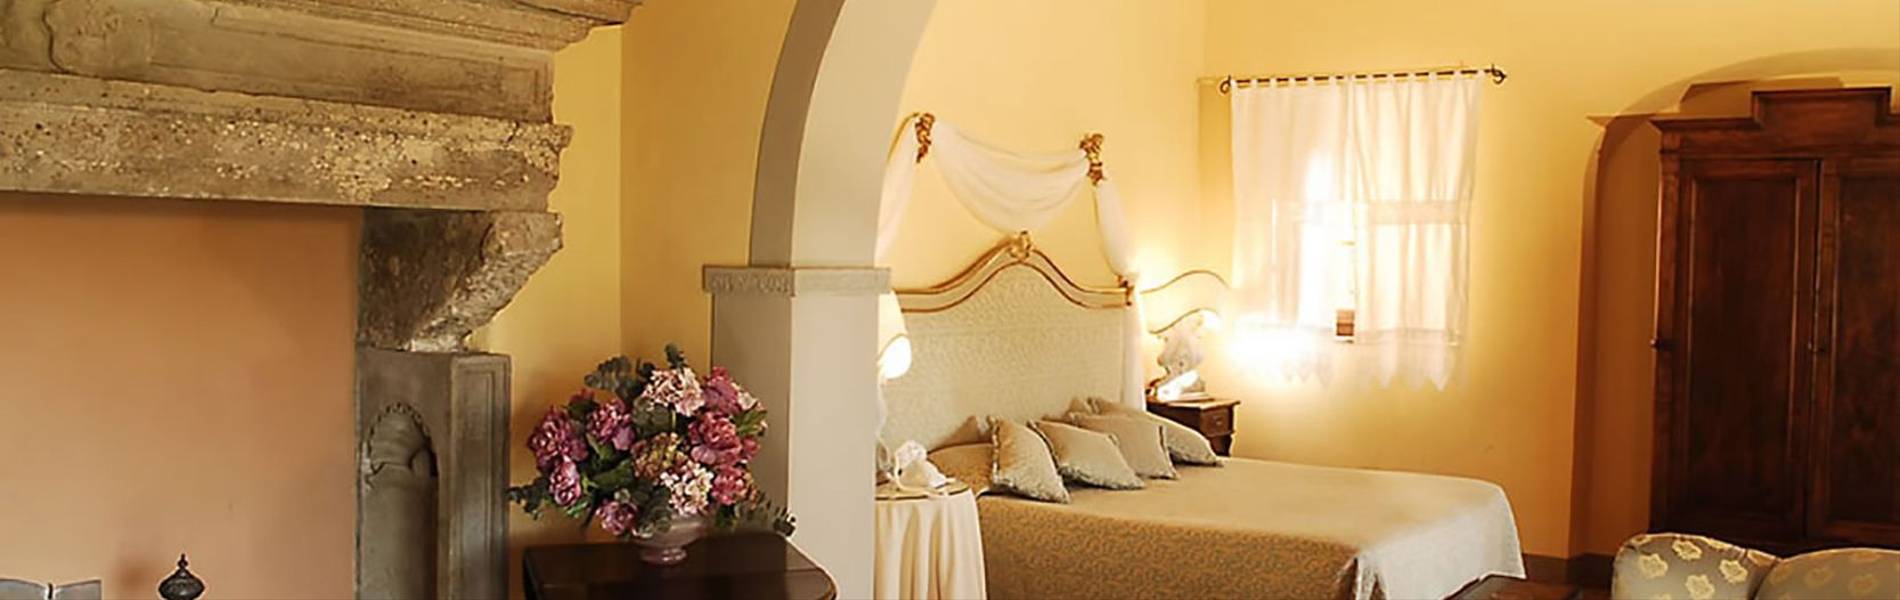 Il Falconiere, Tuscany, Italy, Junior Suite.jpg